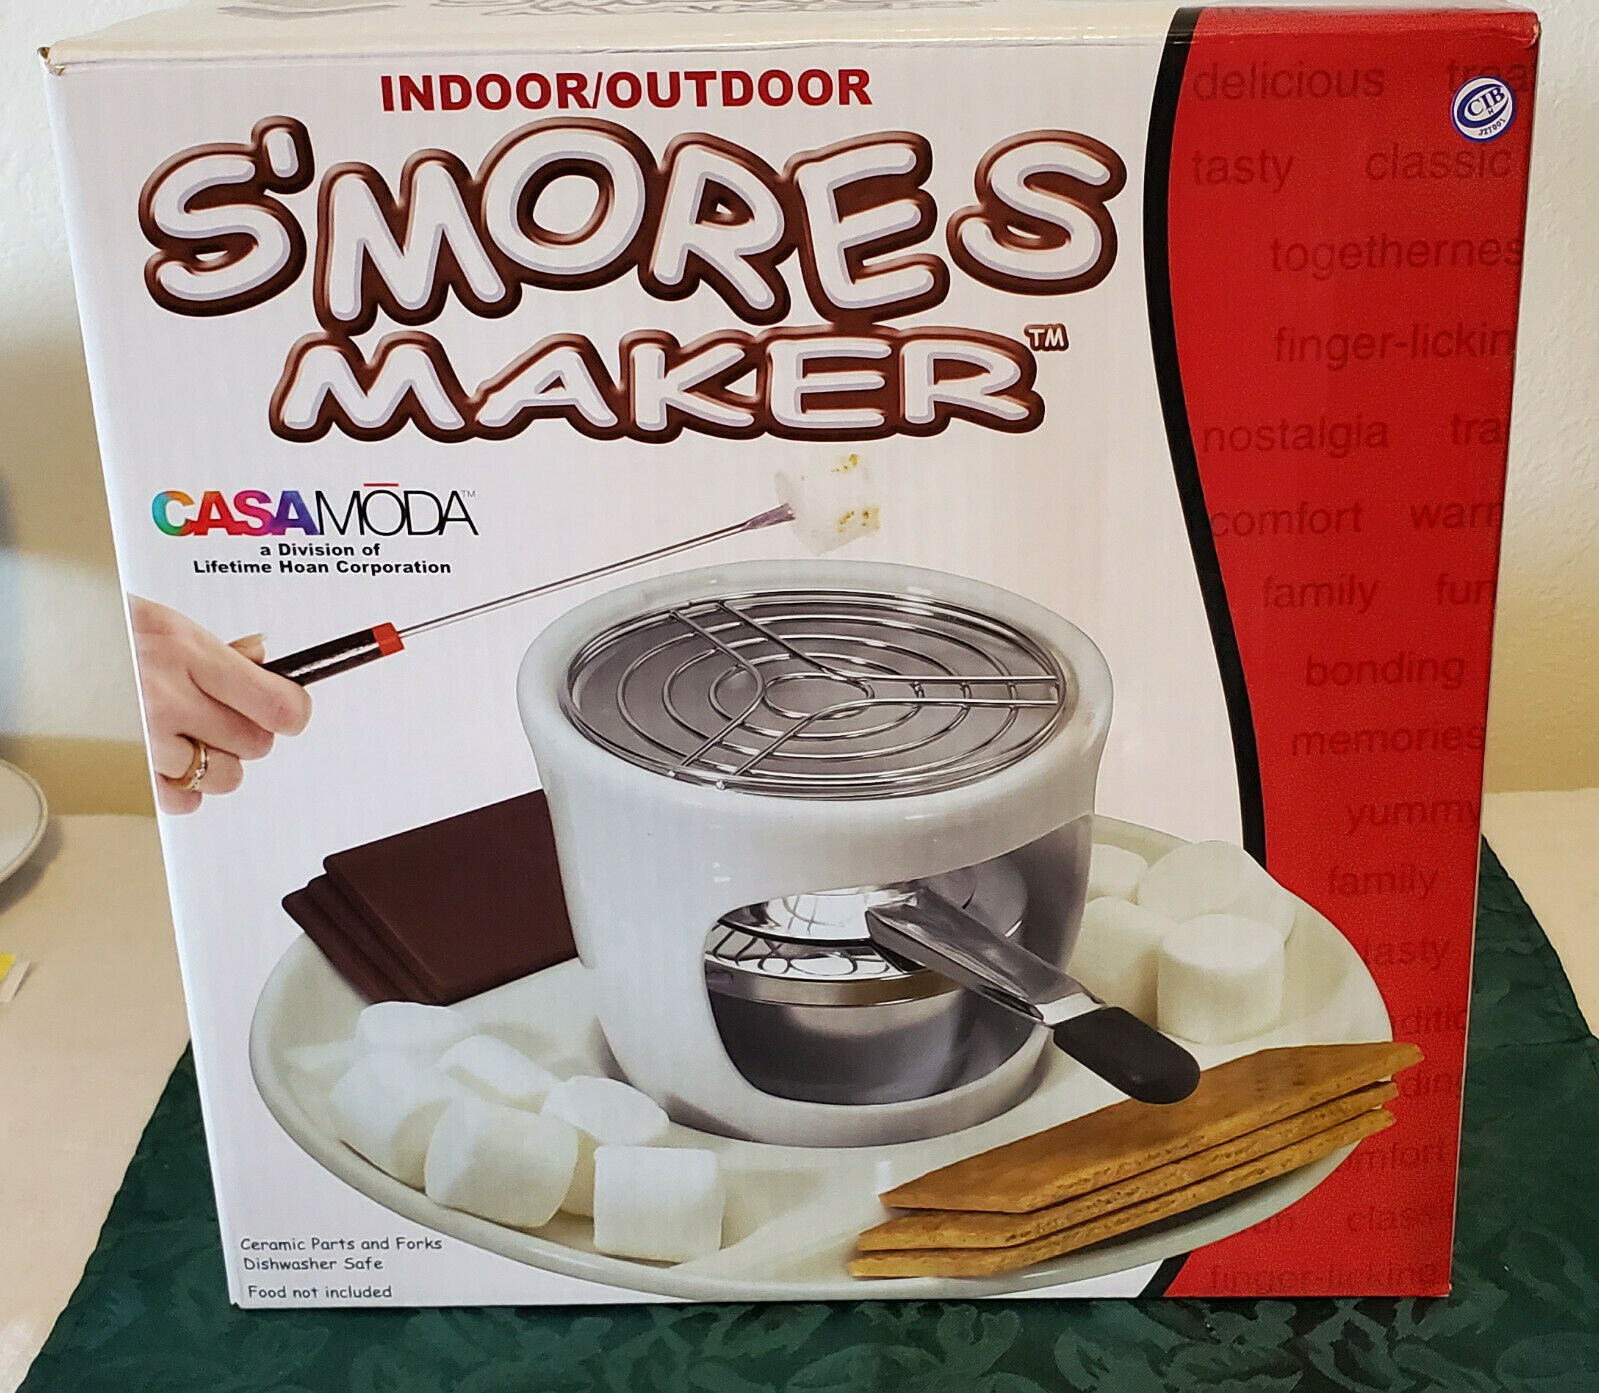 Casa Moda S'mores Maker Indoor/Outdoor White Ceramic Campfire Family Time NEW